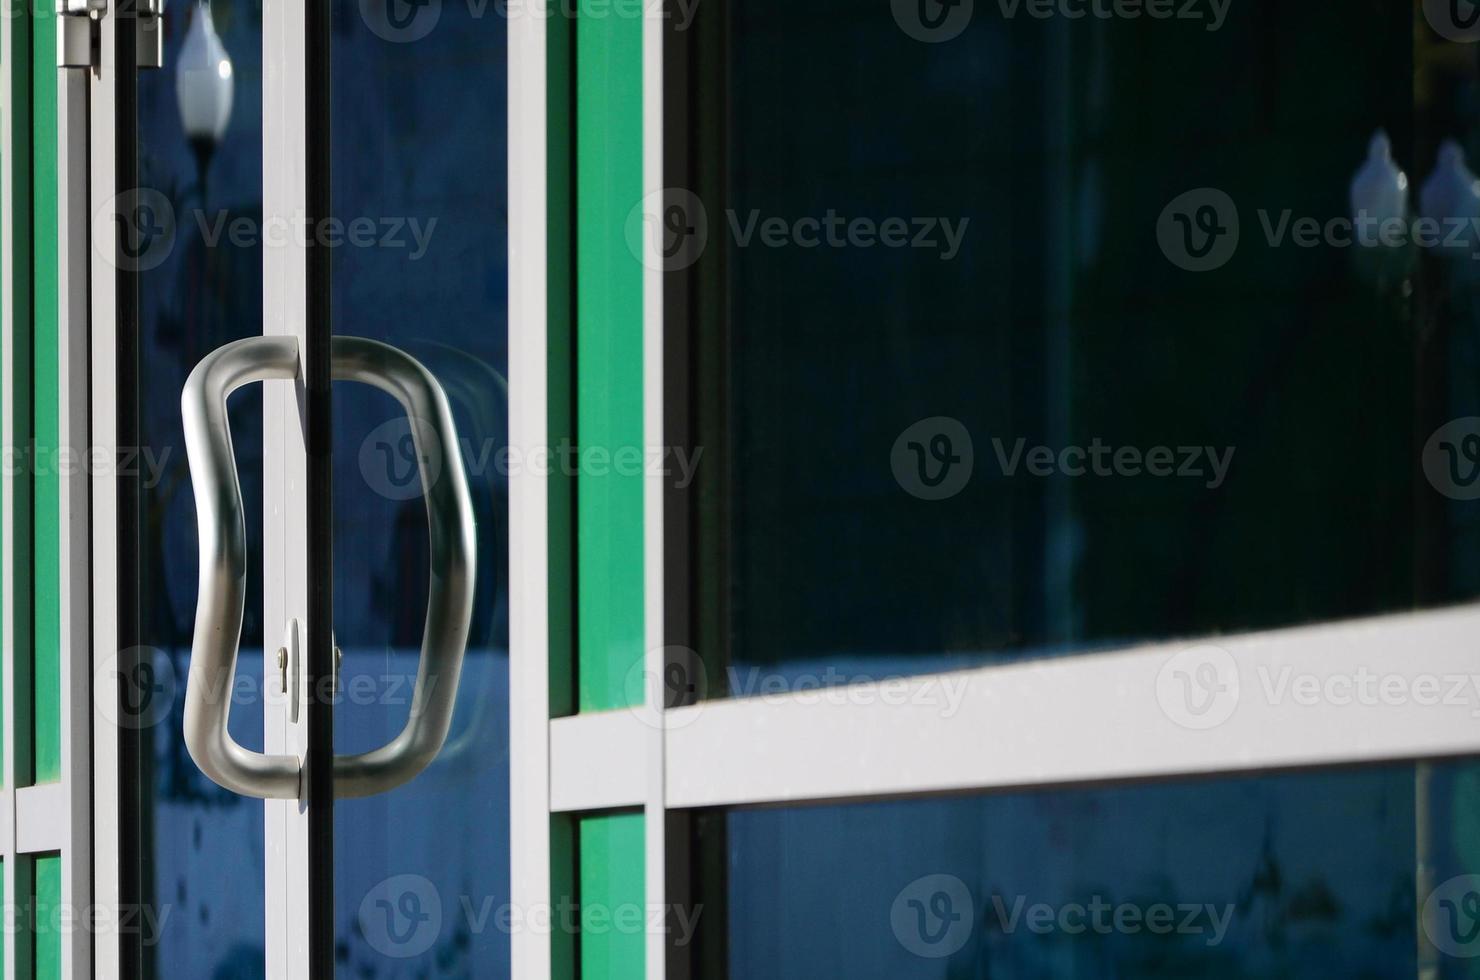 poignée de porte chromée et verre de façade de bureau en aluminium moderne photo